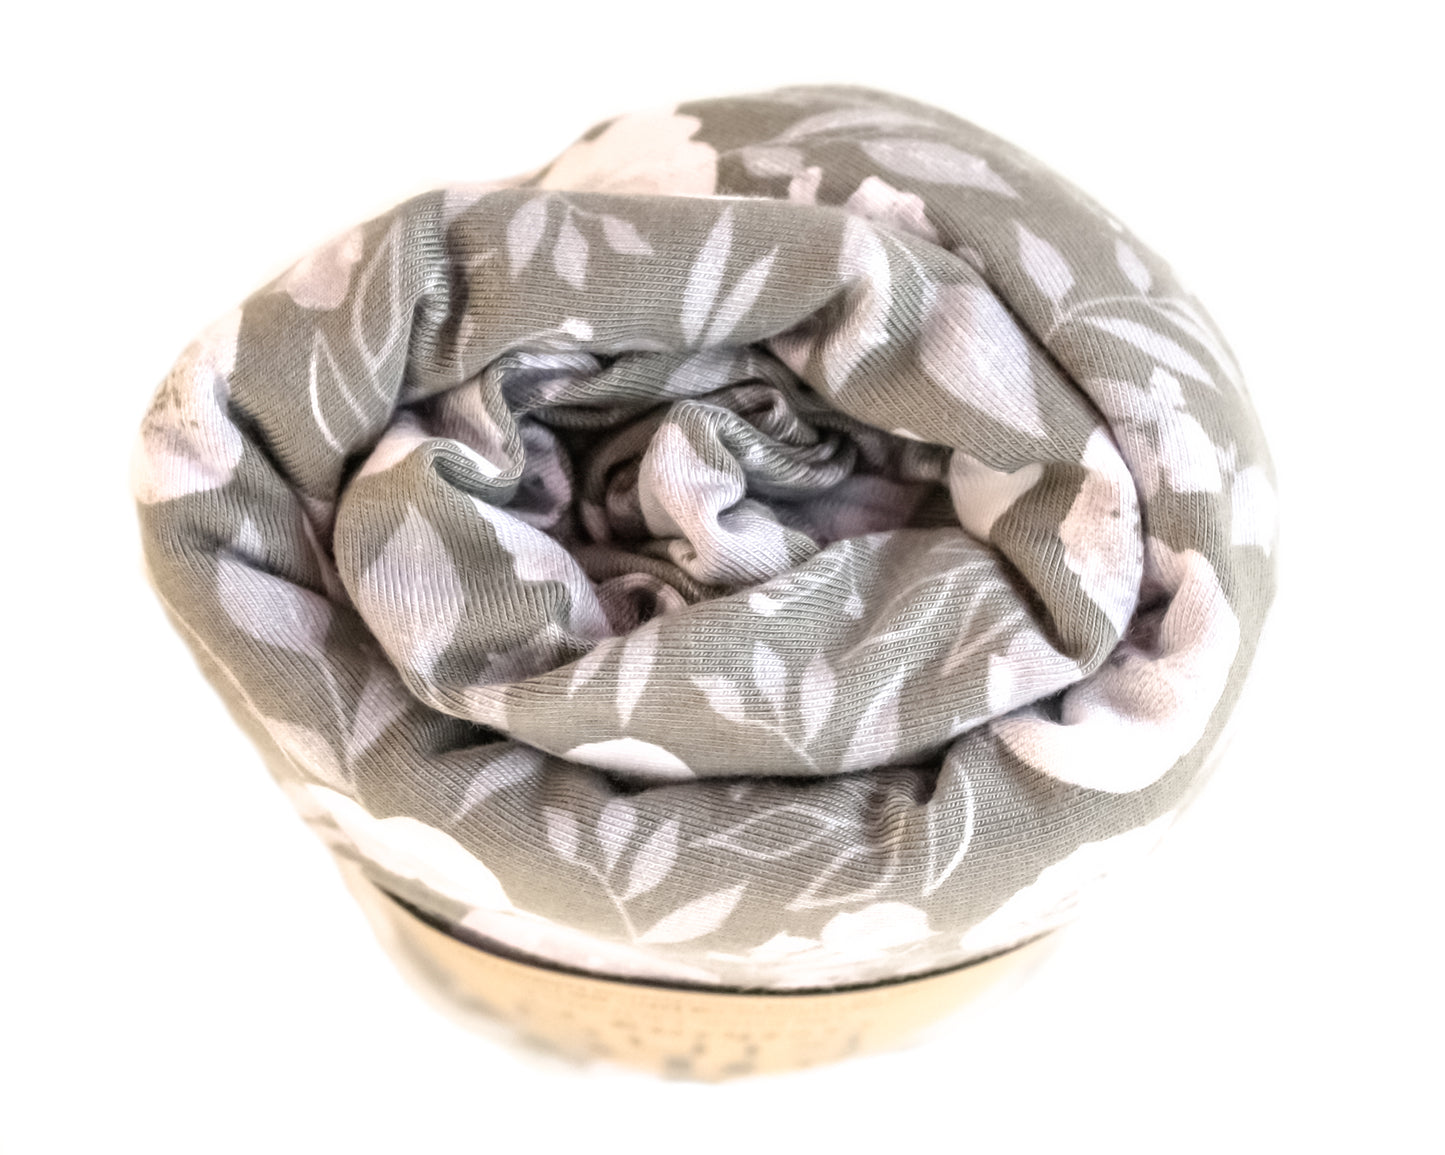 Crib Sheet | Gray Floral - One Kind Clothing, LLC